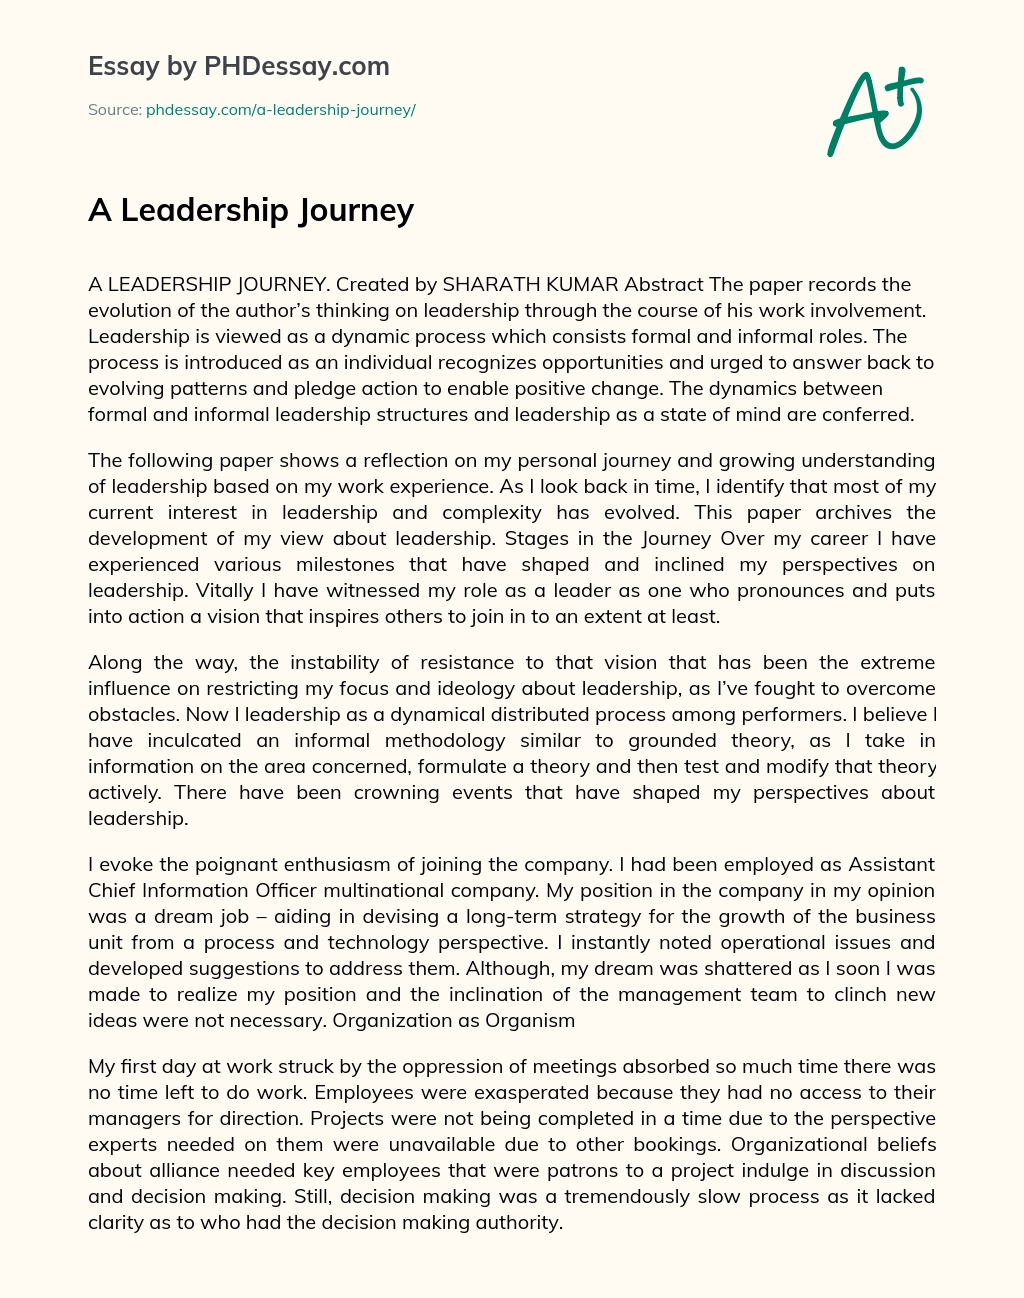 A Leadership Journey essay